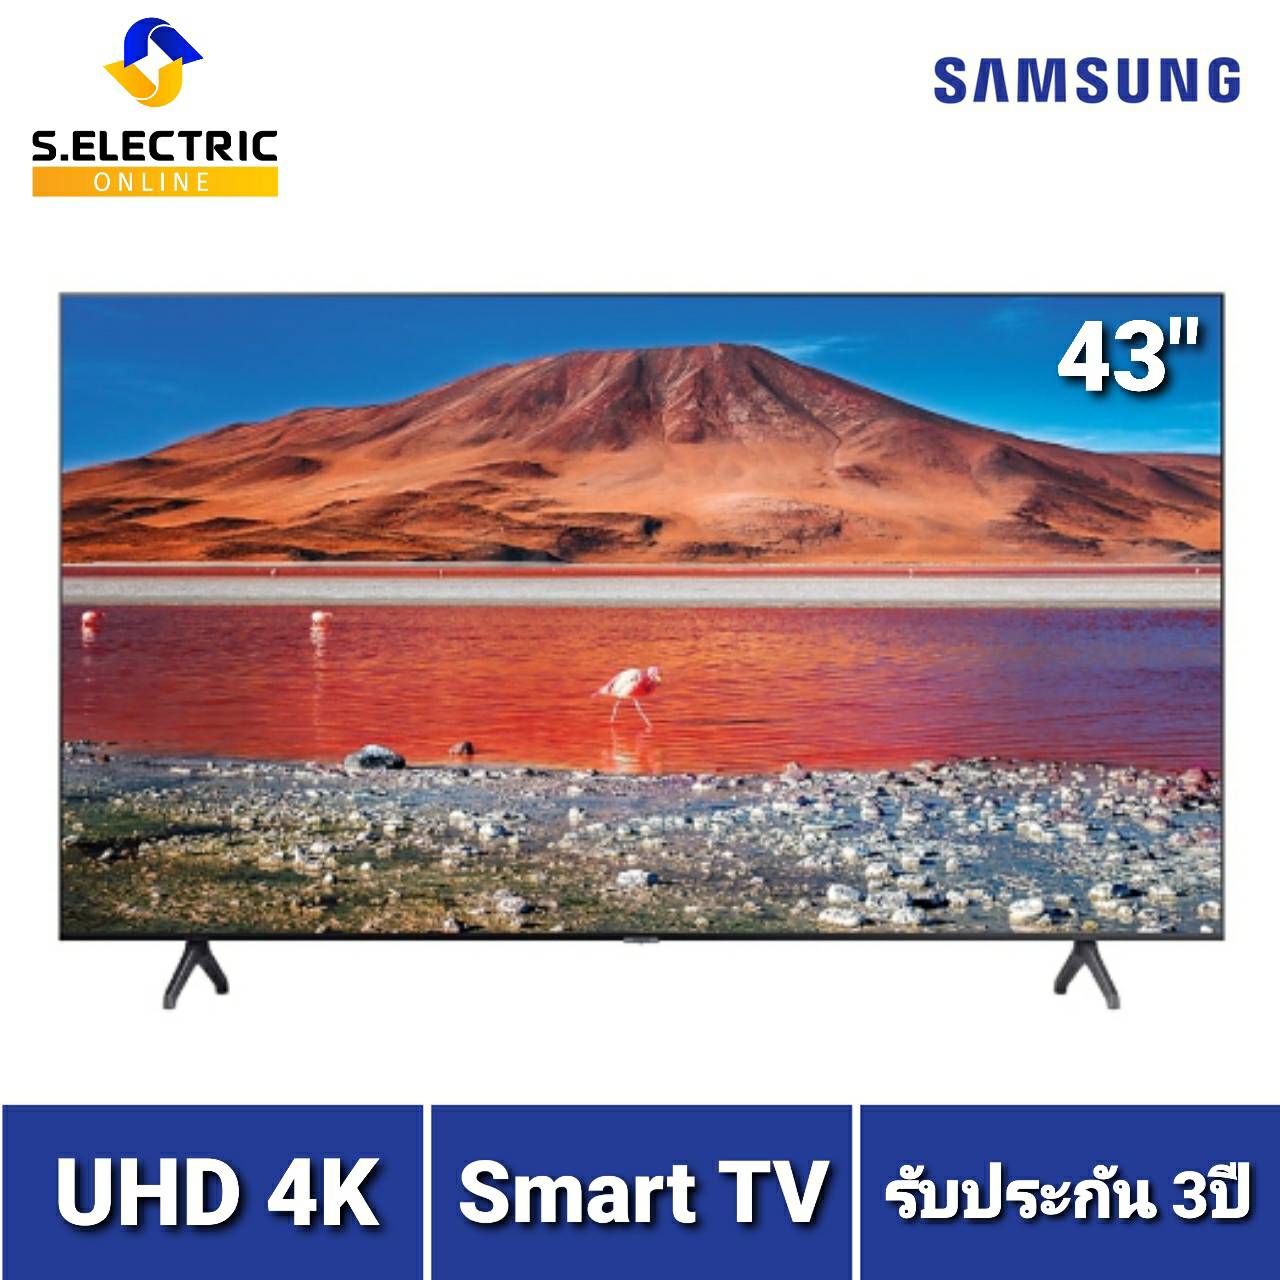 Samsung Smart TV UHD 4K TV UA43TU7000KXXT (New 2020) ขนาด 43 นิ้ว